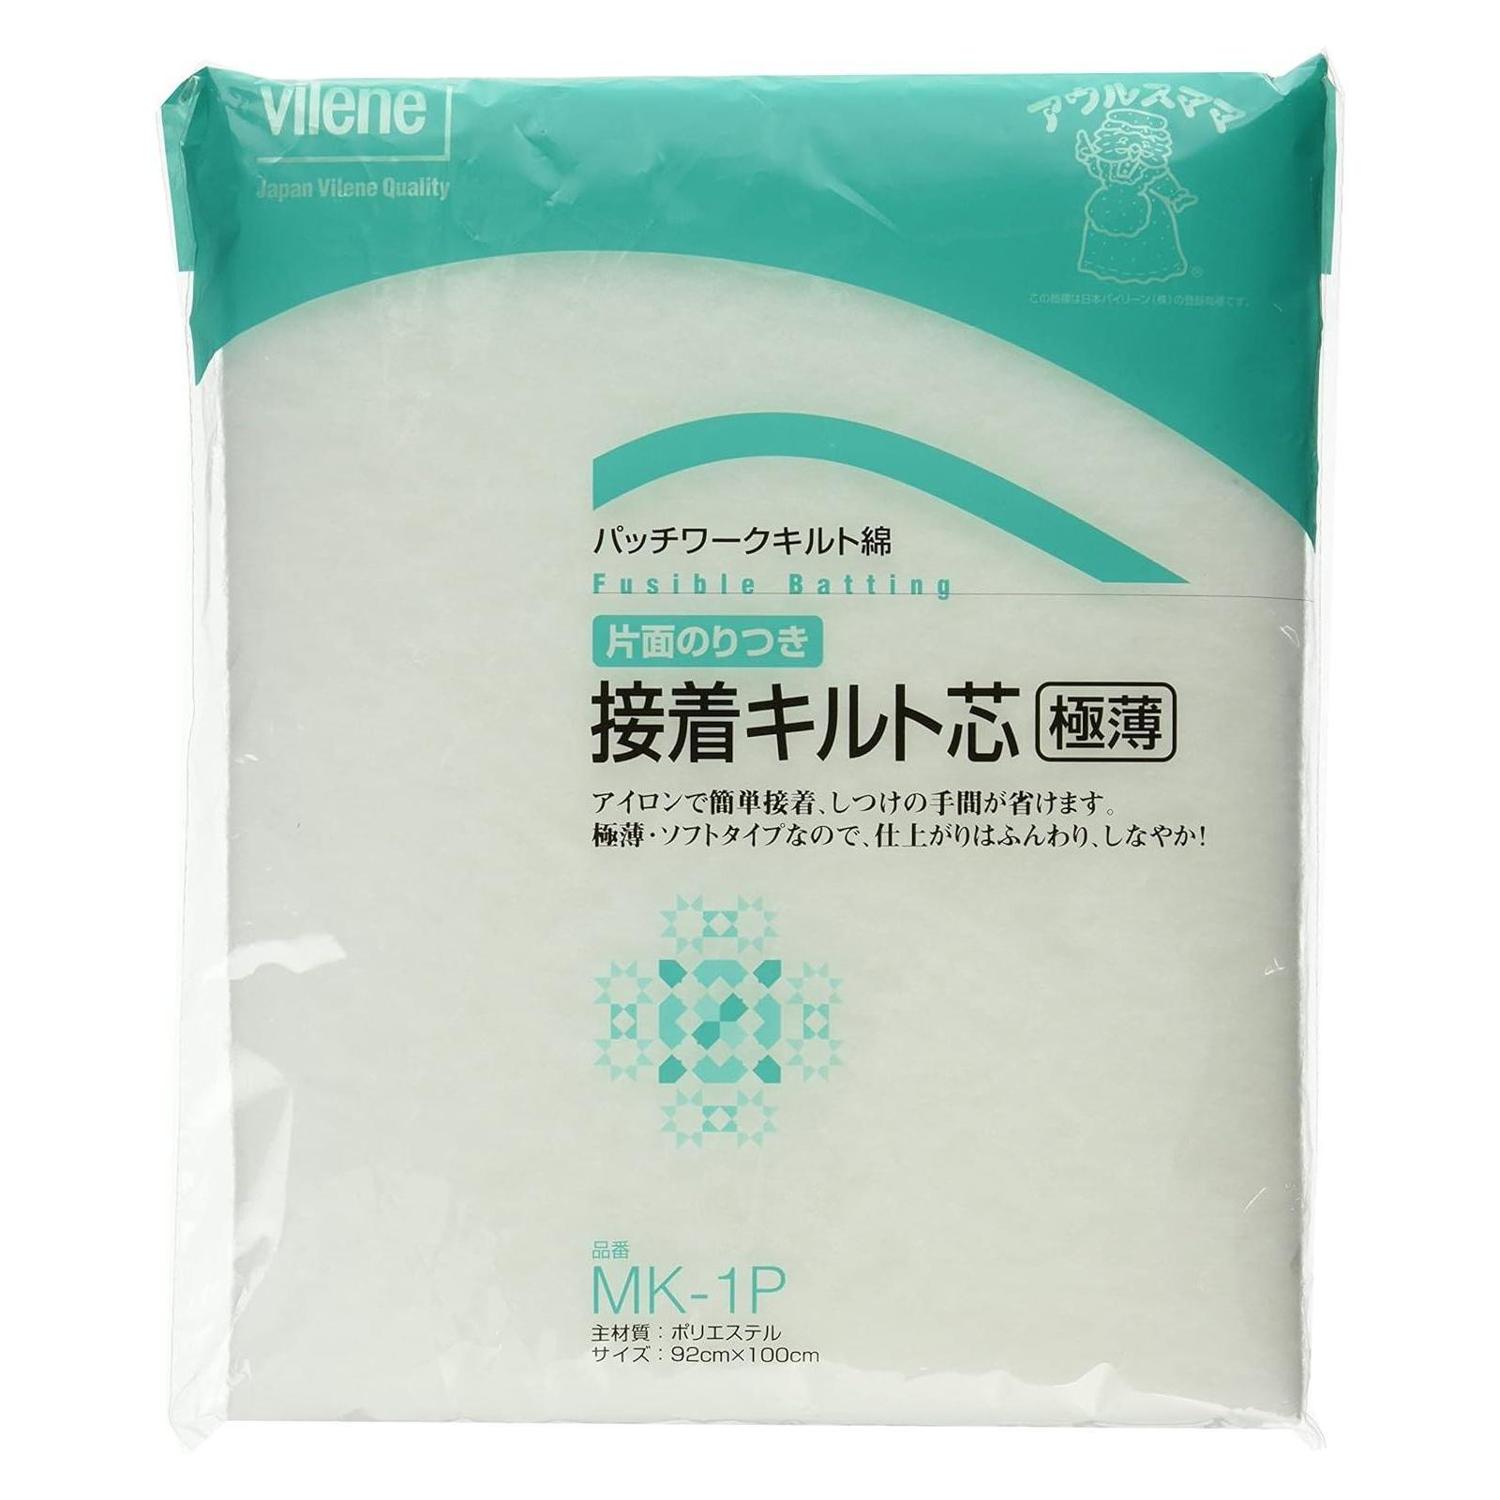 MK-1P Vilene Quilt Core, Adhesive Type, Ultra Thin, 92cm Width x 1m Length, White (bag)